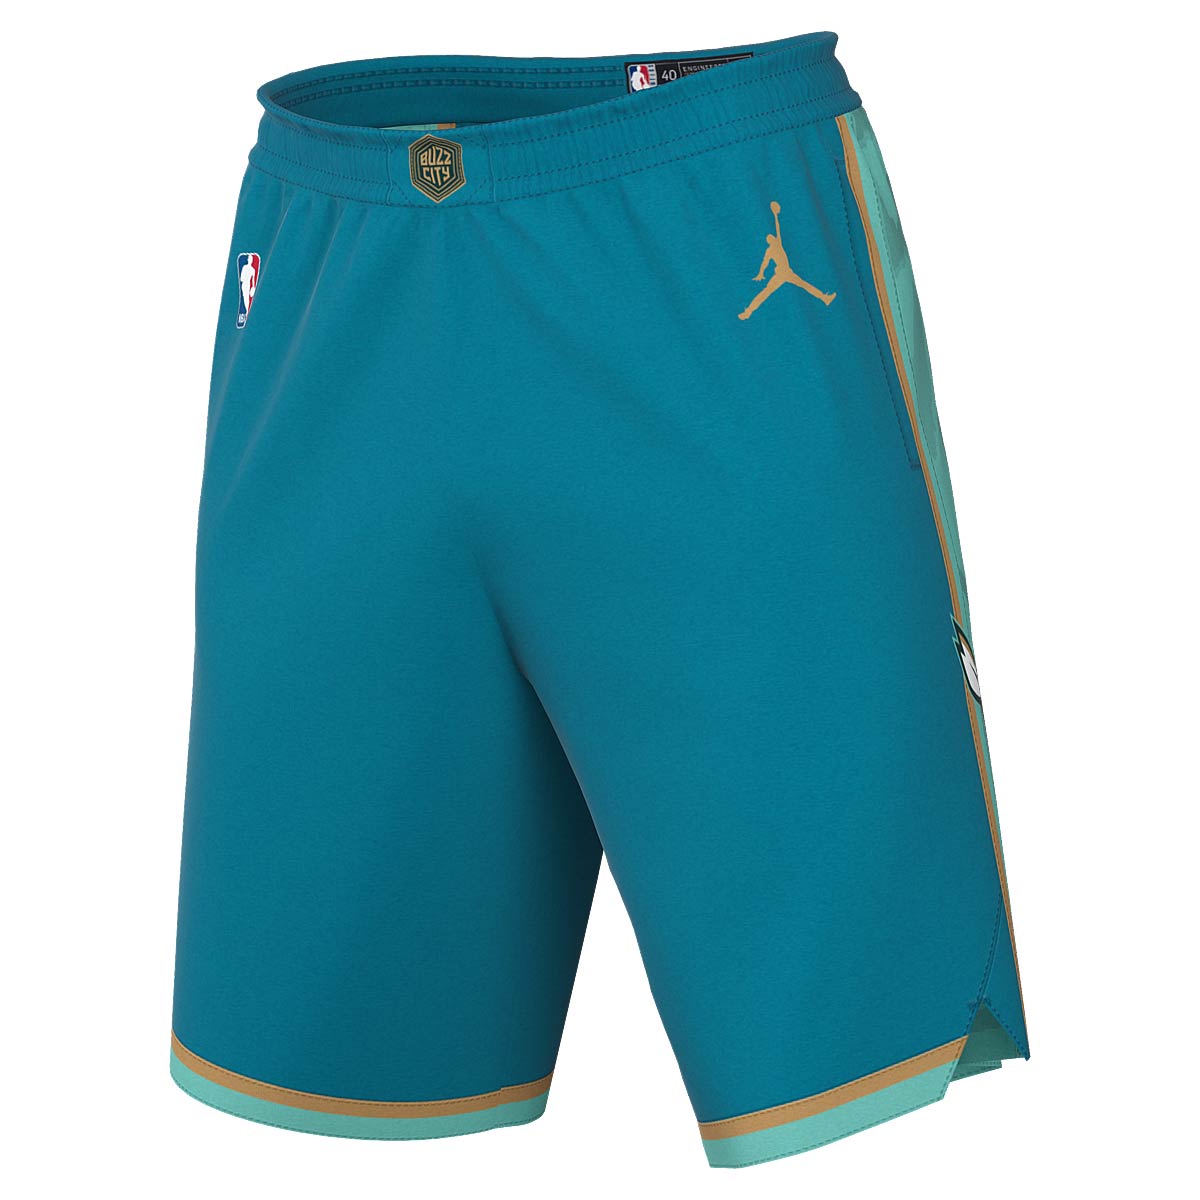 Jordan NBA Charlotte Hornets City Edition Swingman Shorts, Rapid Teal/schwarz/schwarz 2XL